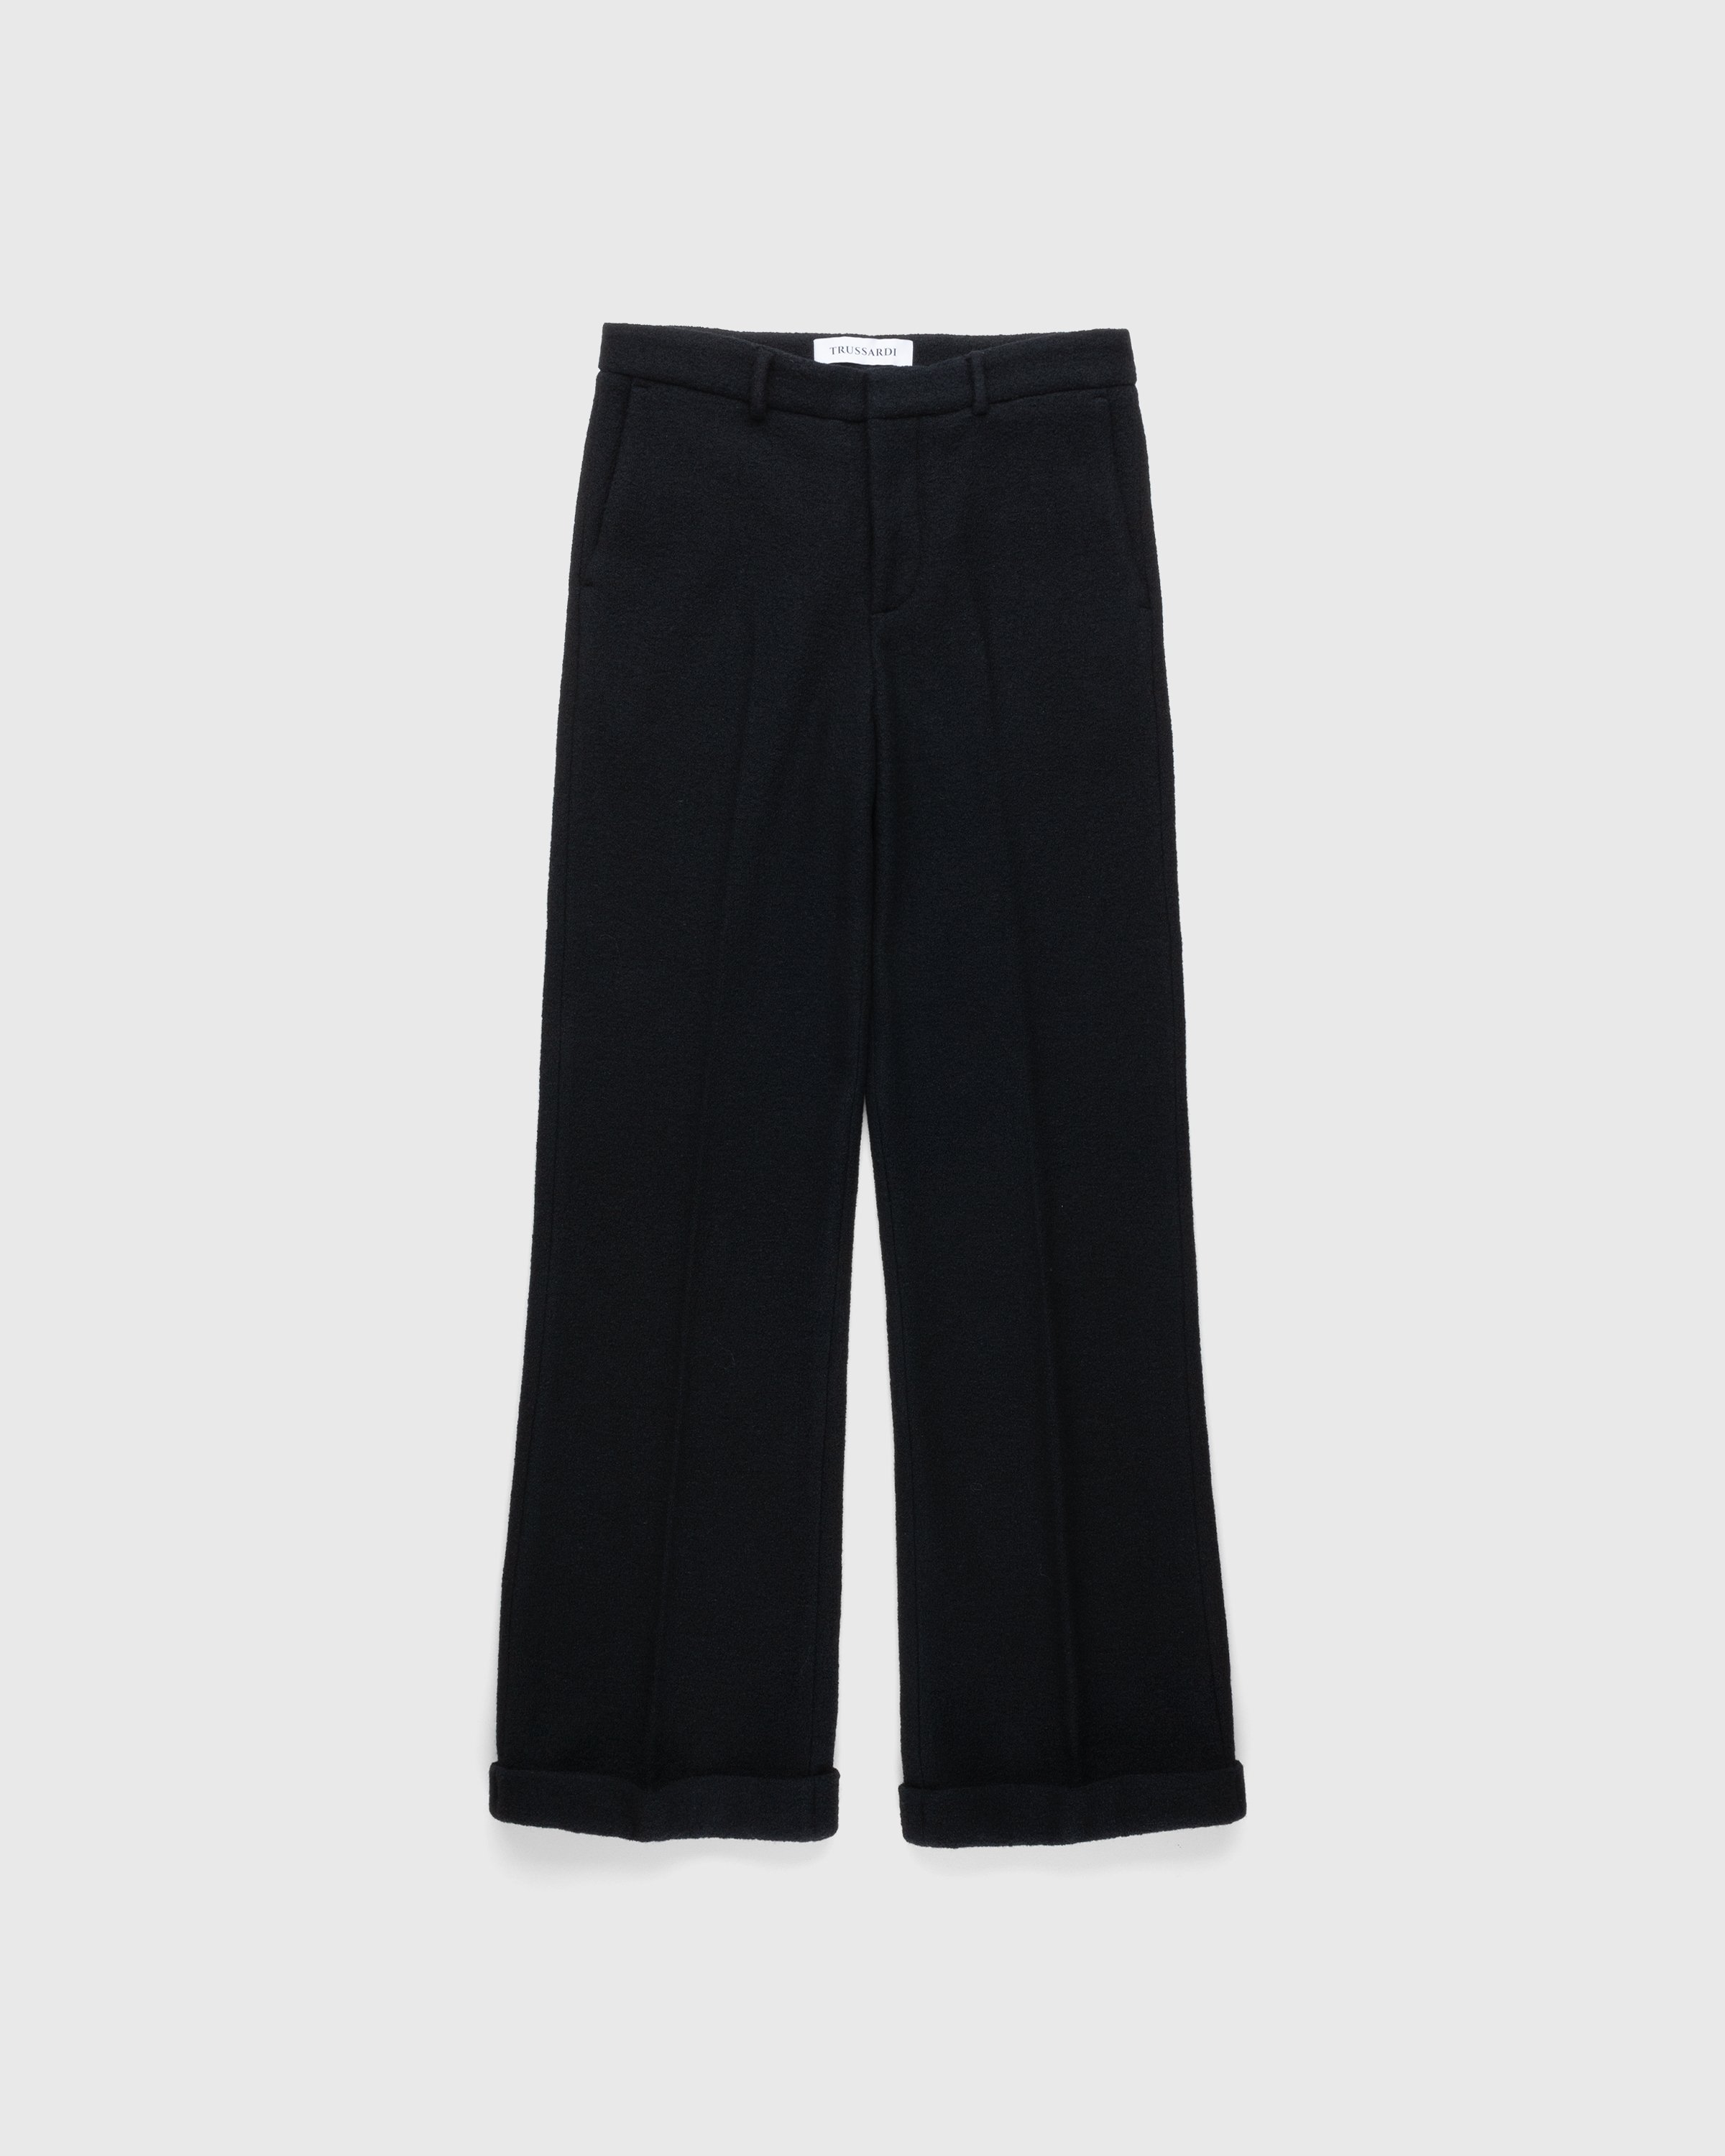 Trussardi - Boucle Jersey Trousers Black - Clothing - Black - Image 1